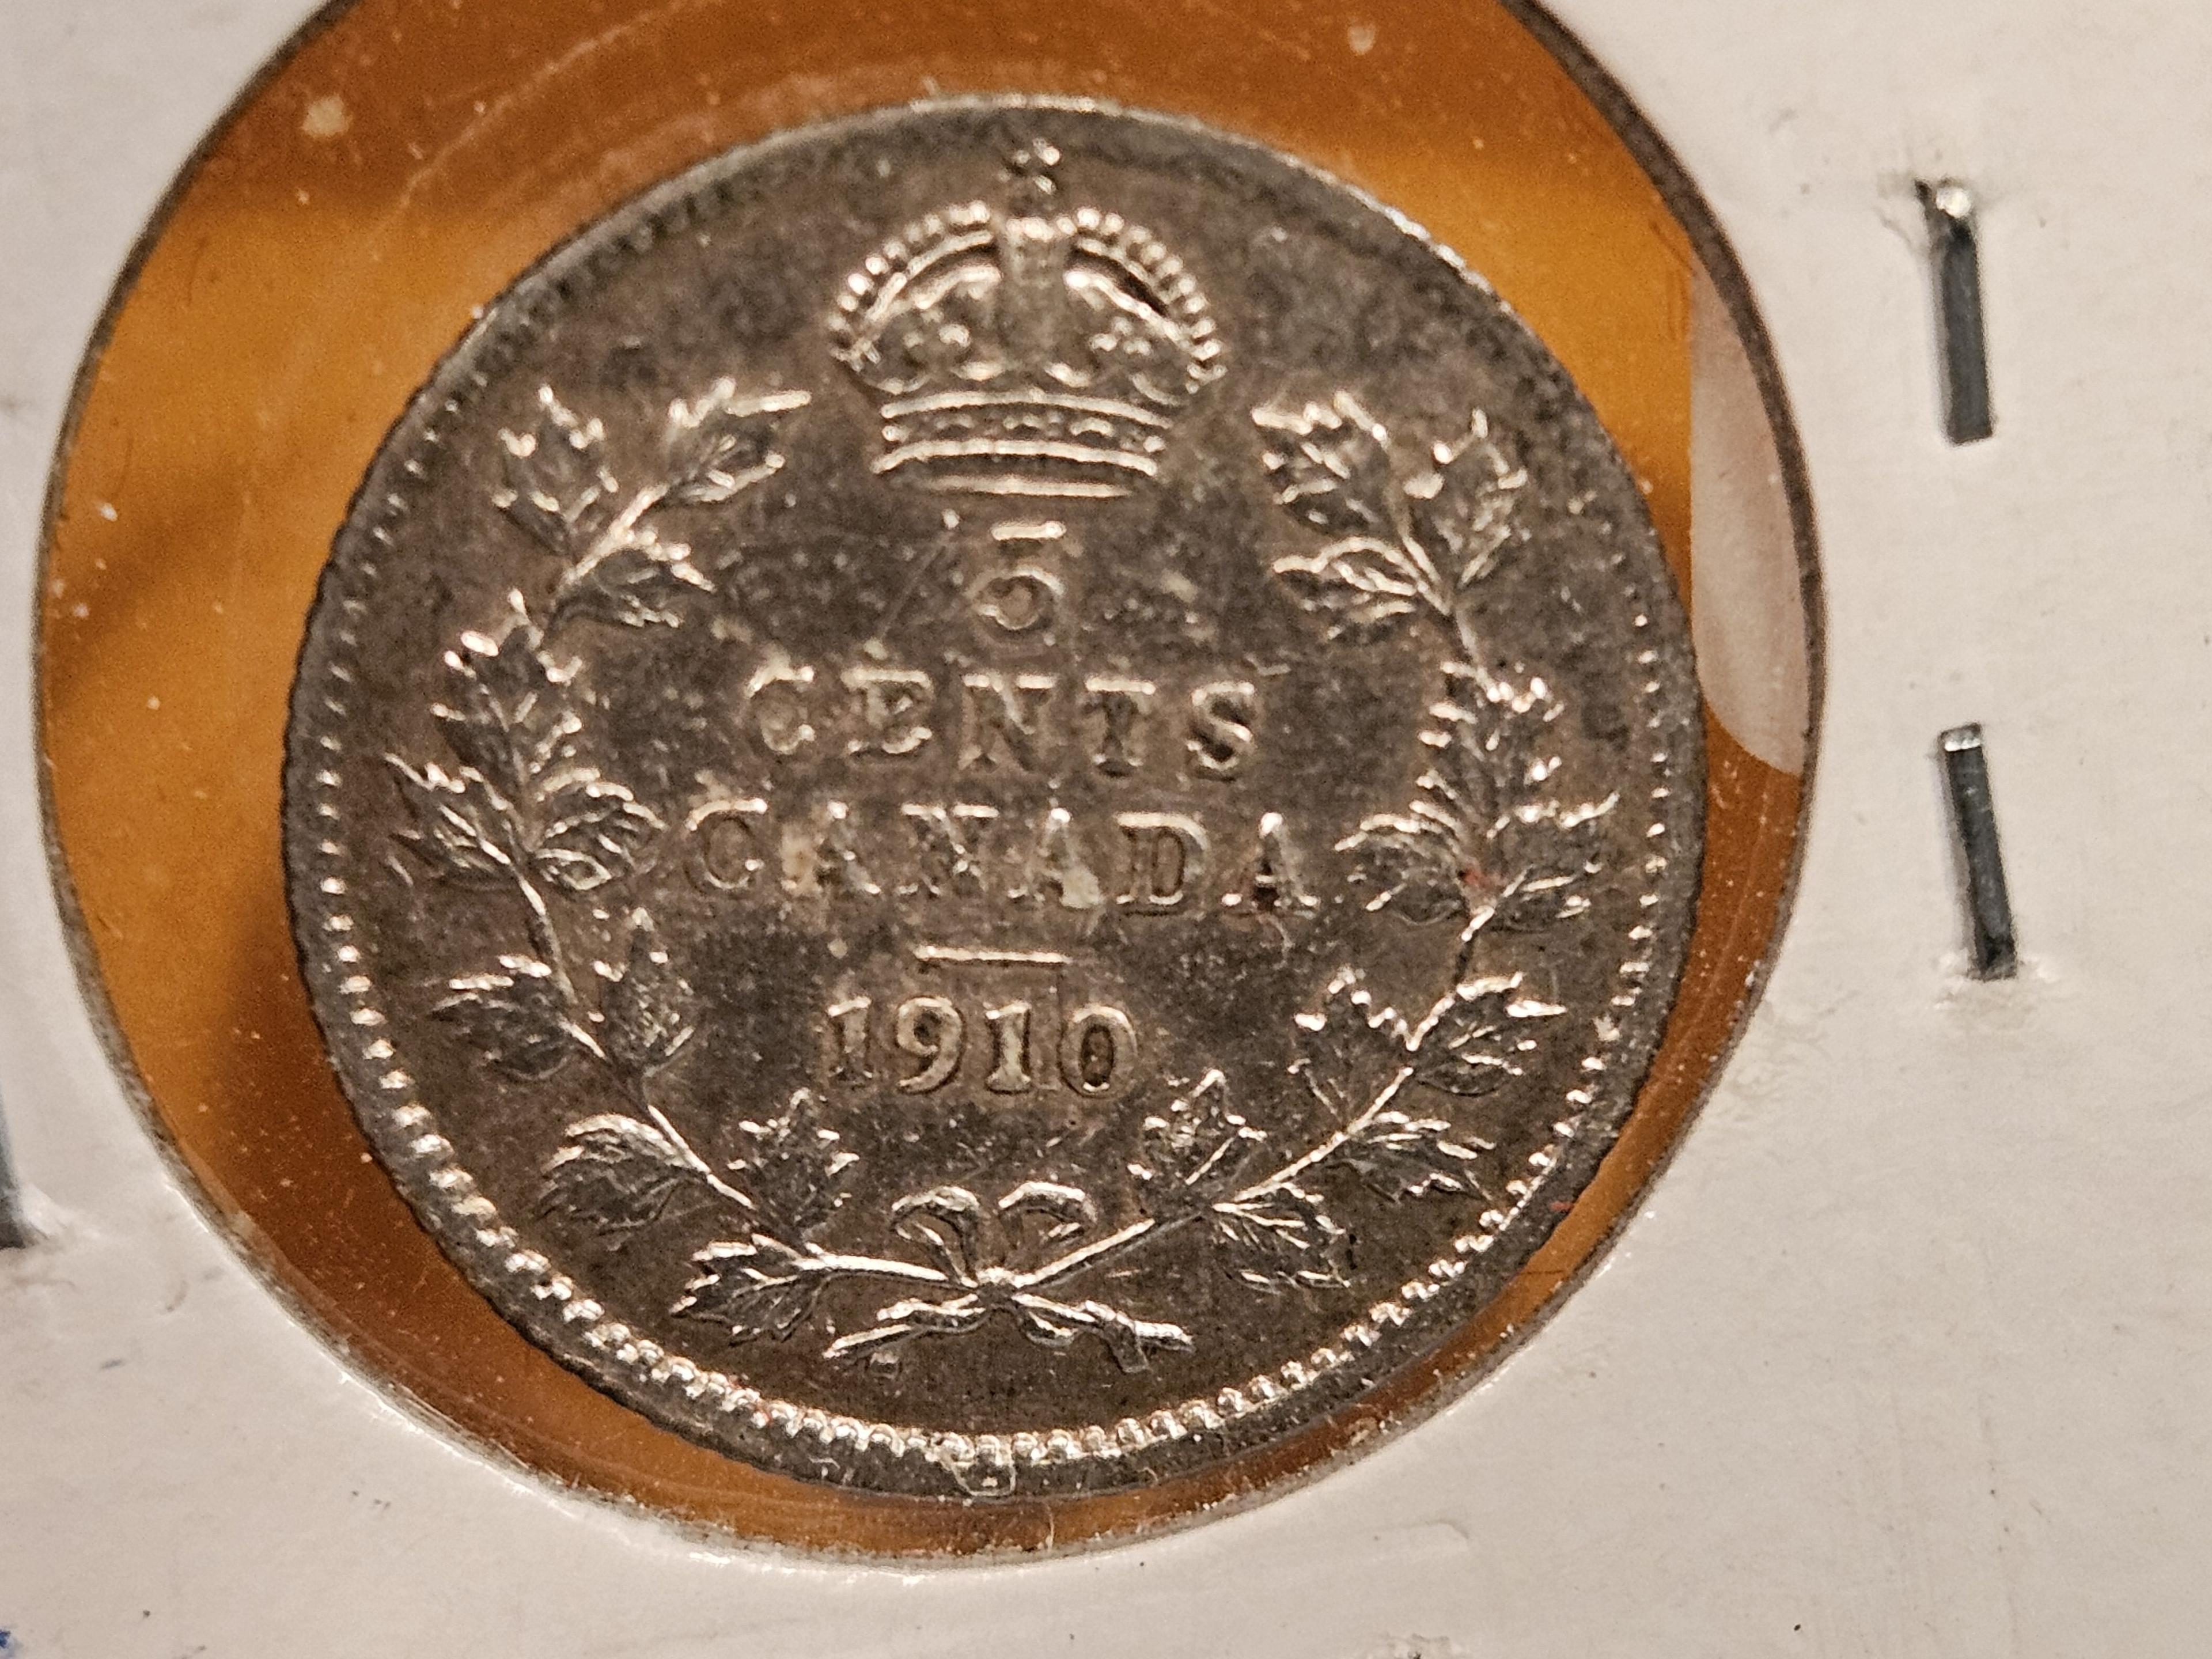 1910 Canada silver 5 cents